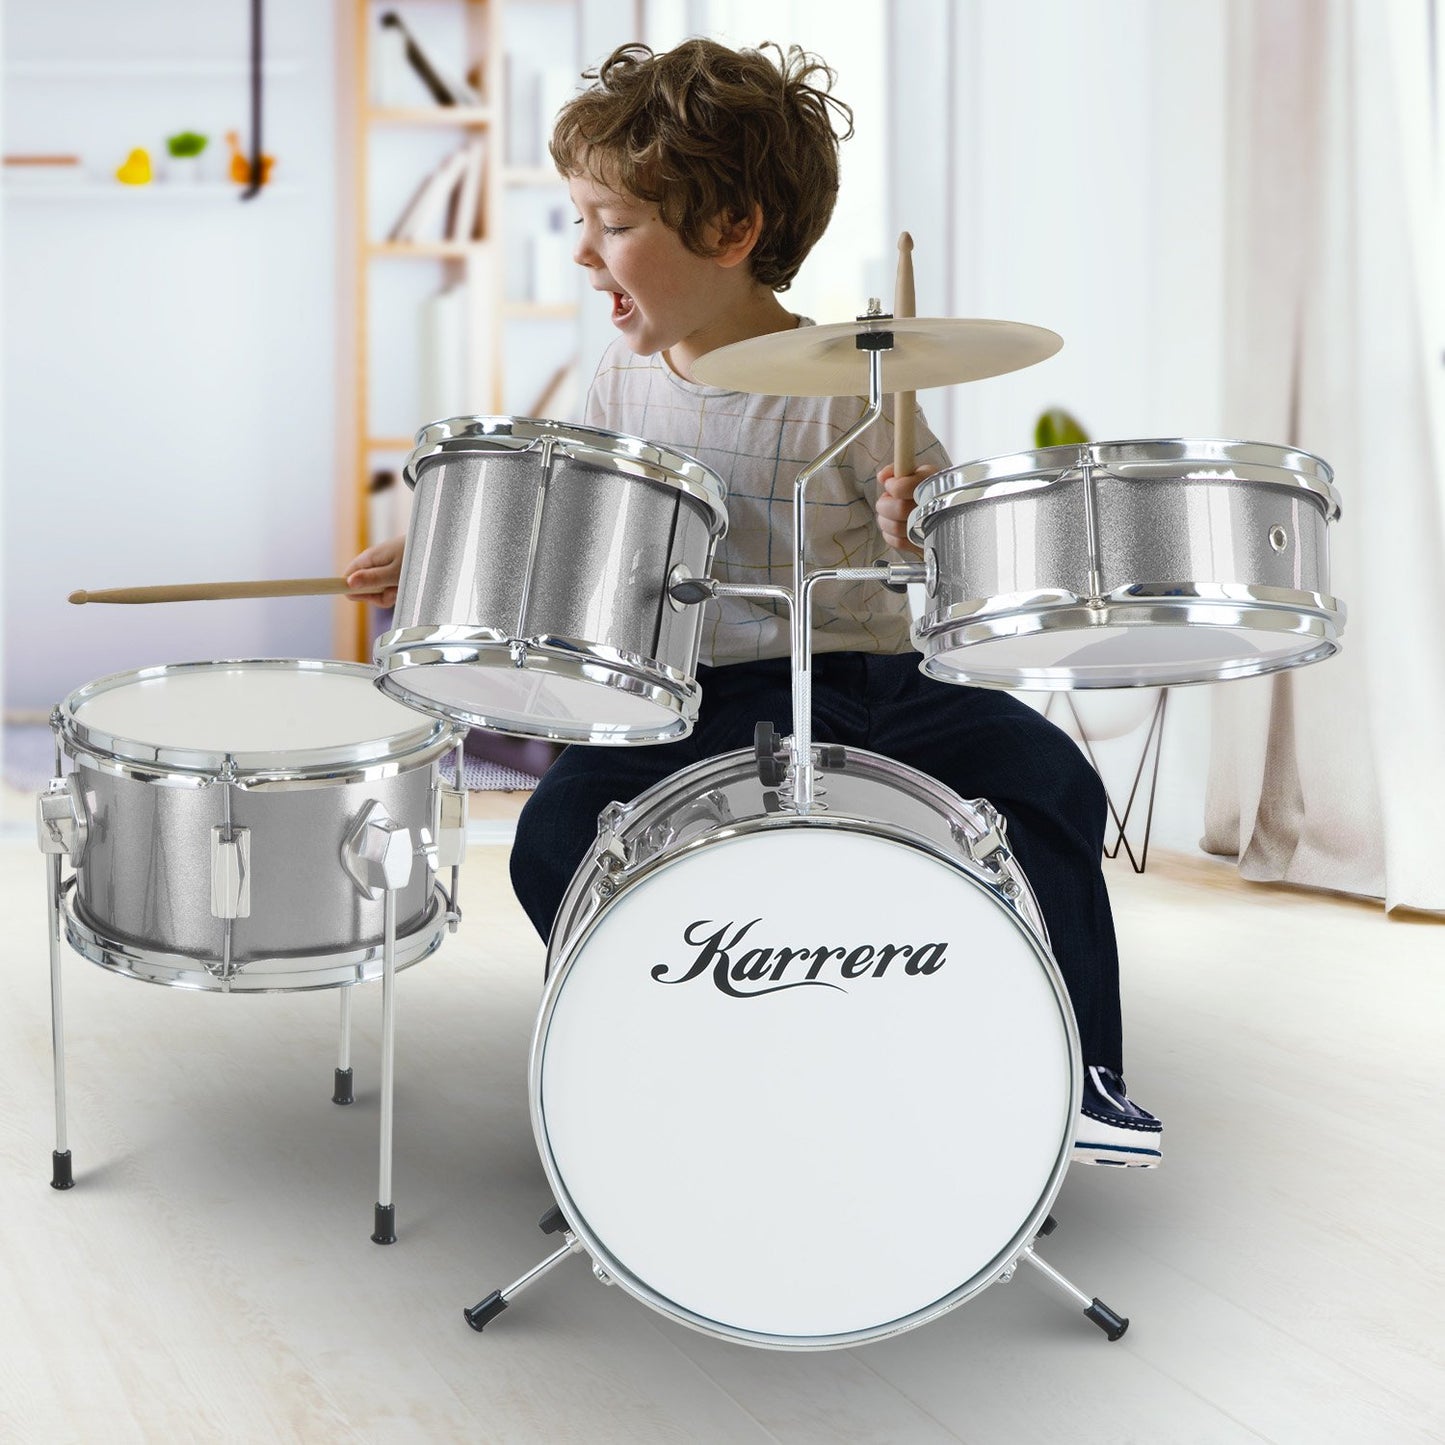 Karrera Childrens 4pc Drum Kit - Silver